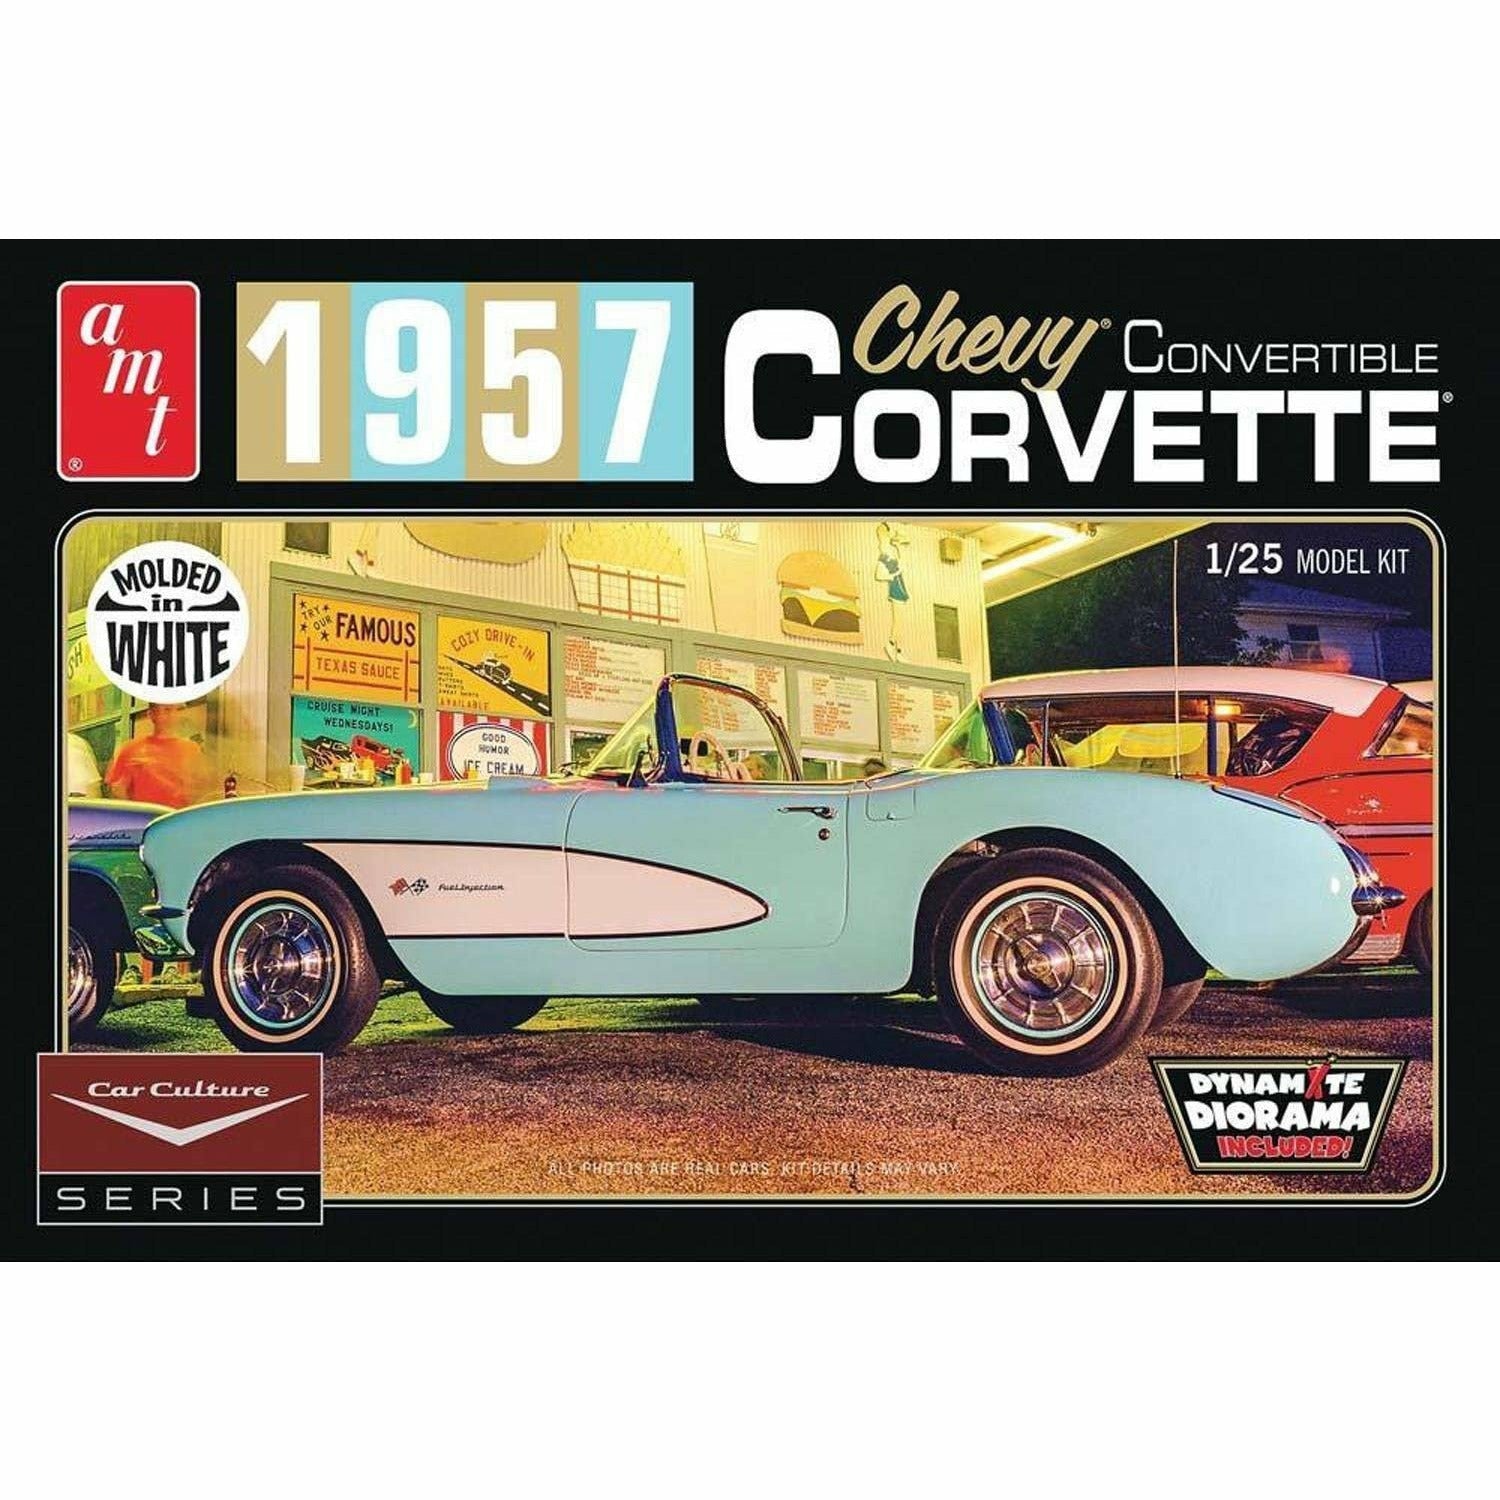 1957 Corvette Convertible 1/25 by AMT